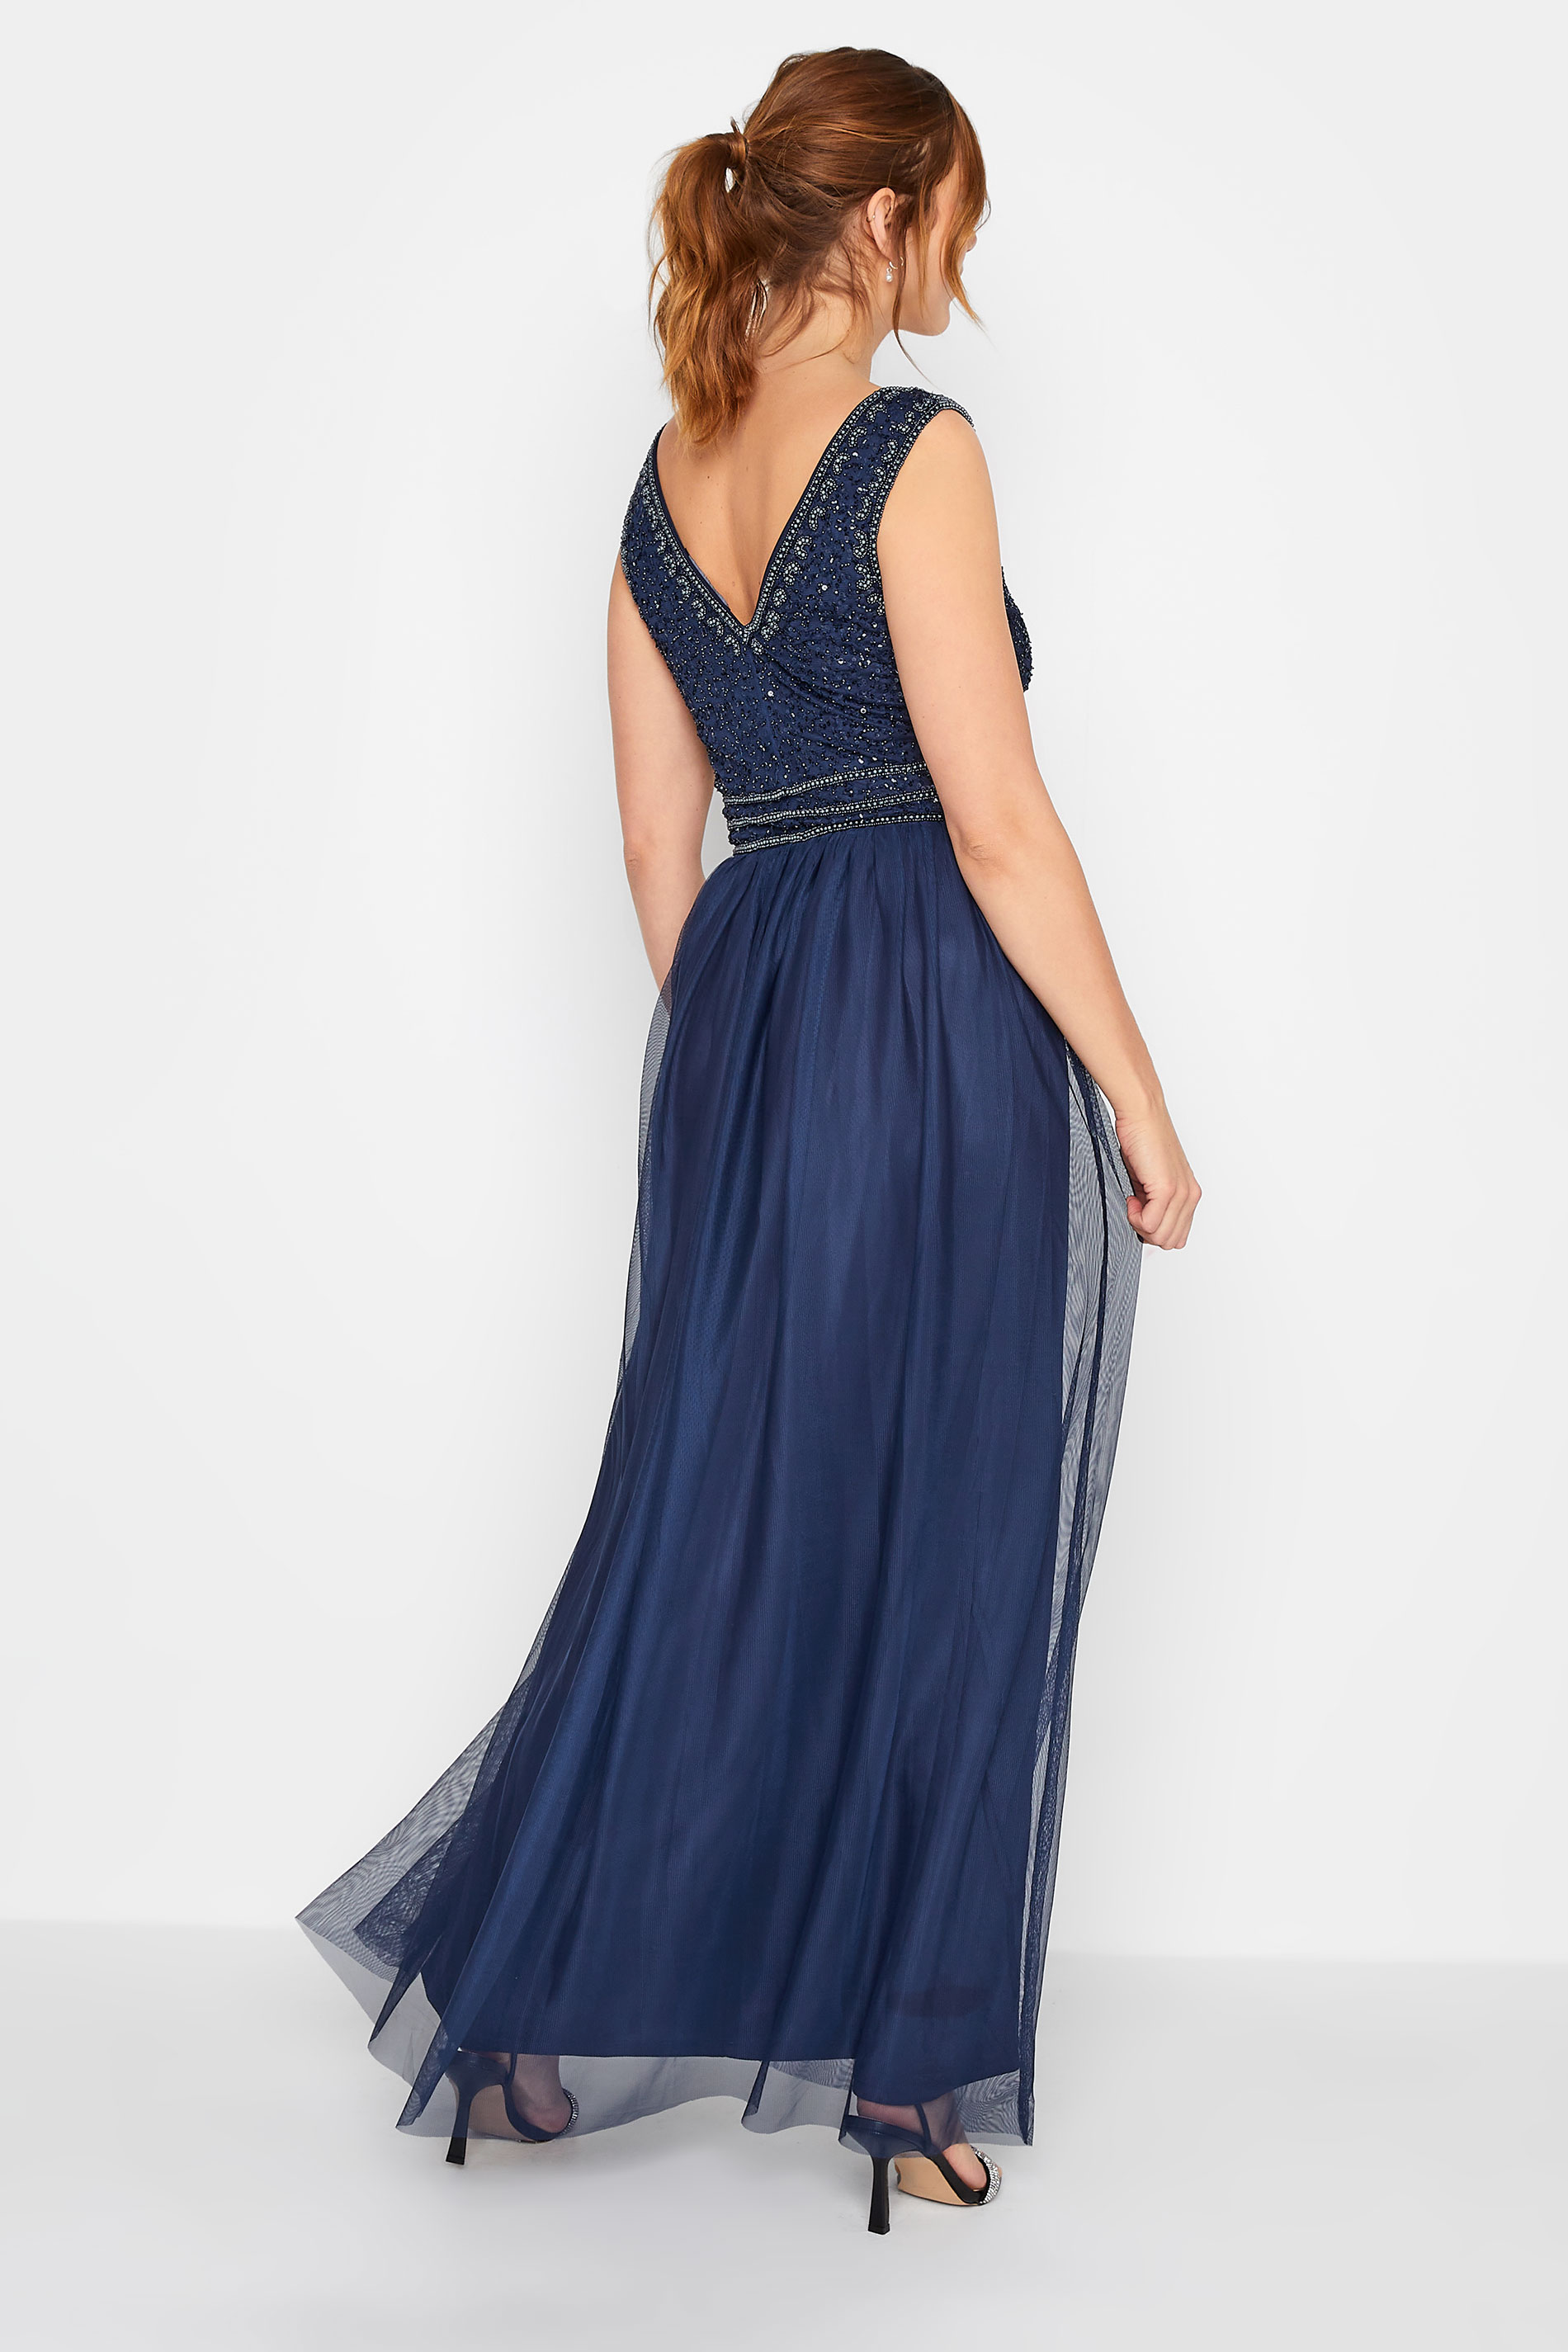 LTS Tall Women's Navy Blue Sequin Hand Embellished Maxi Dress | Long Tall Sally 3